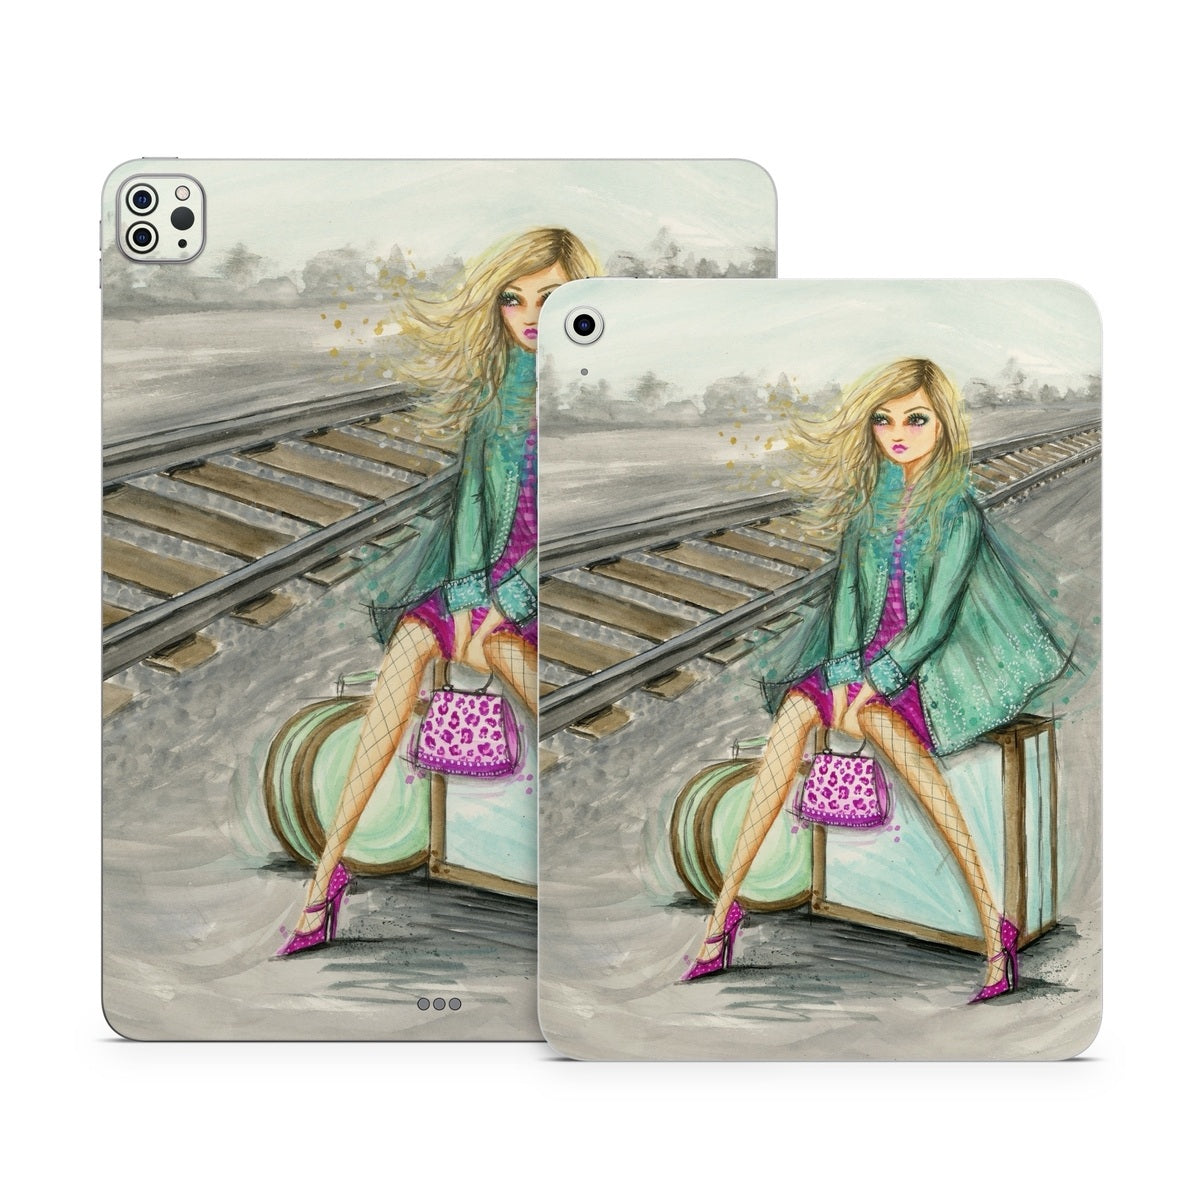 Lulu Waiting by the Train Tracks - Apple iPad Skin